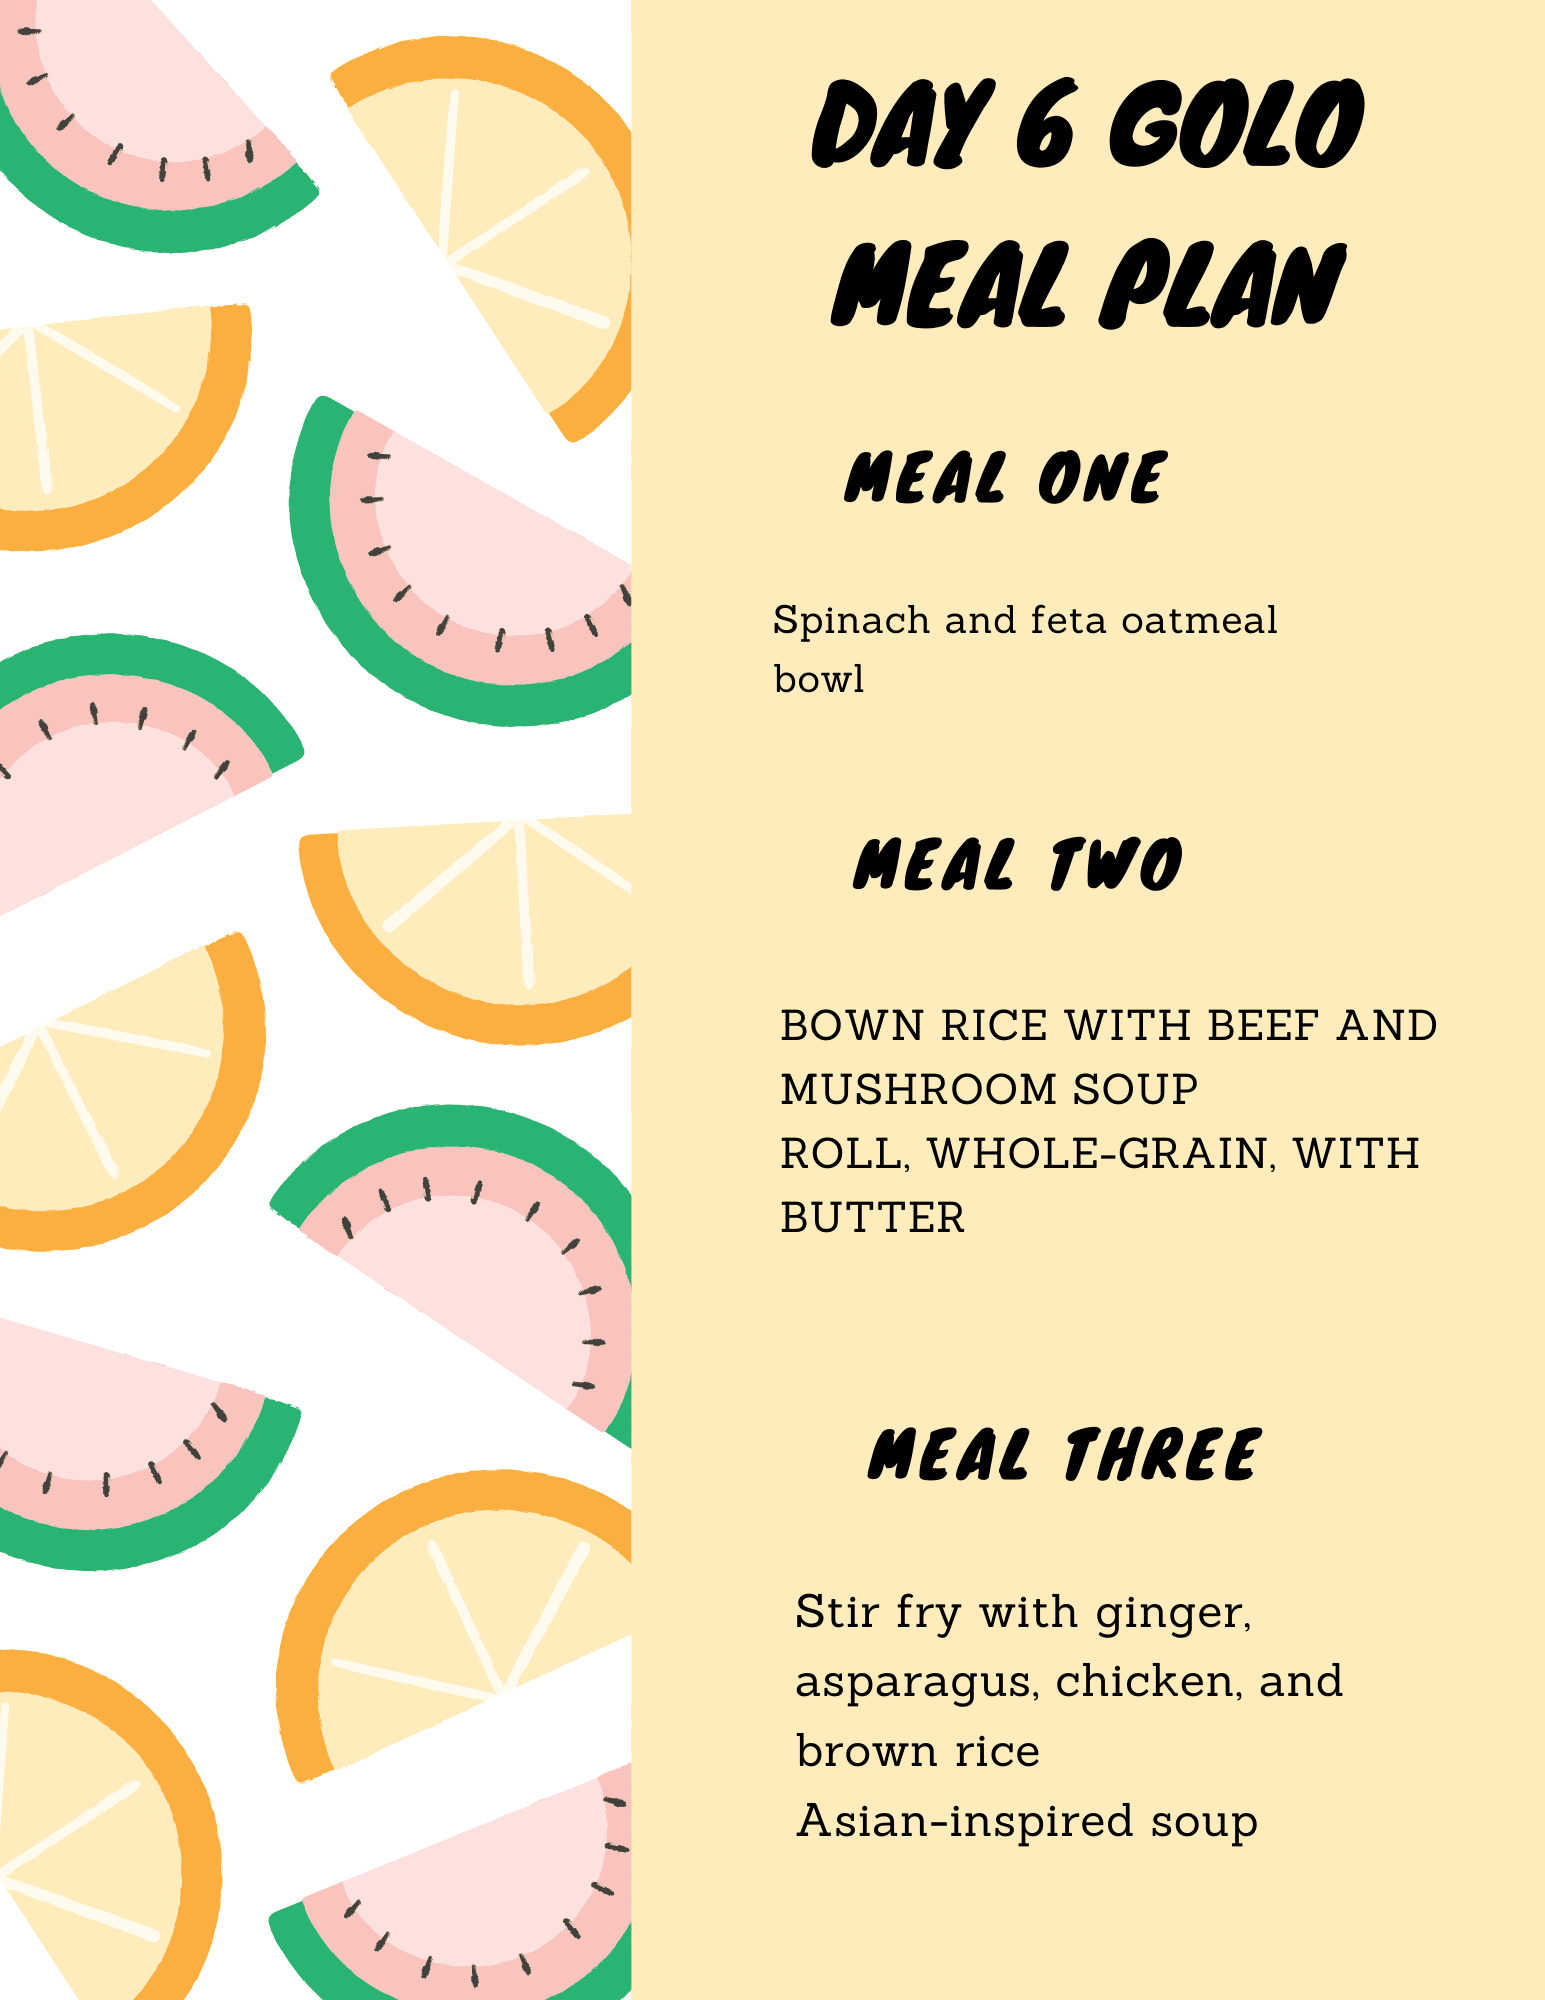 Golo Meal Plan (7)